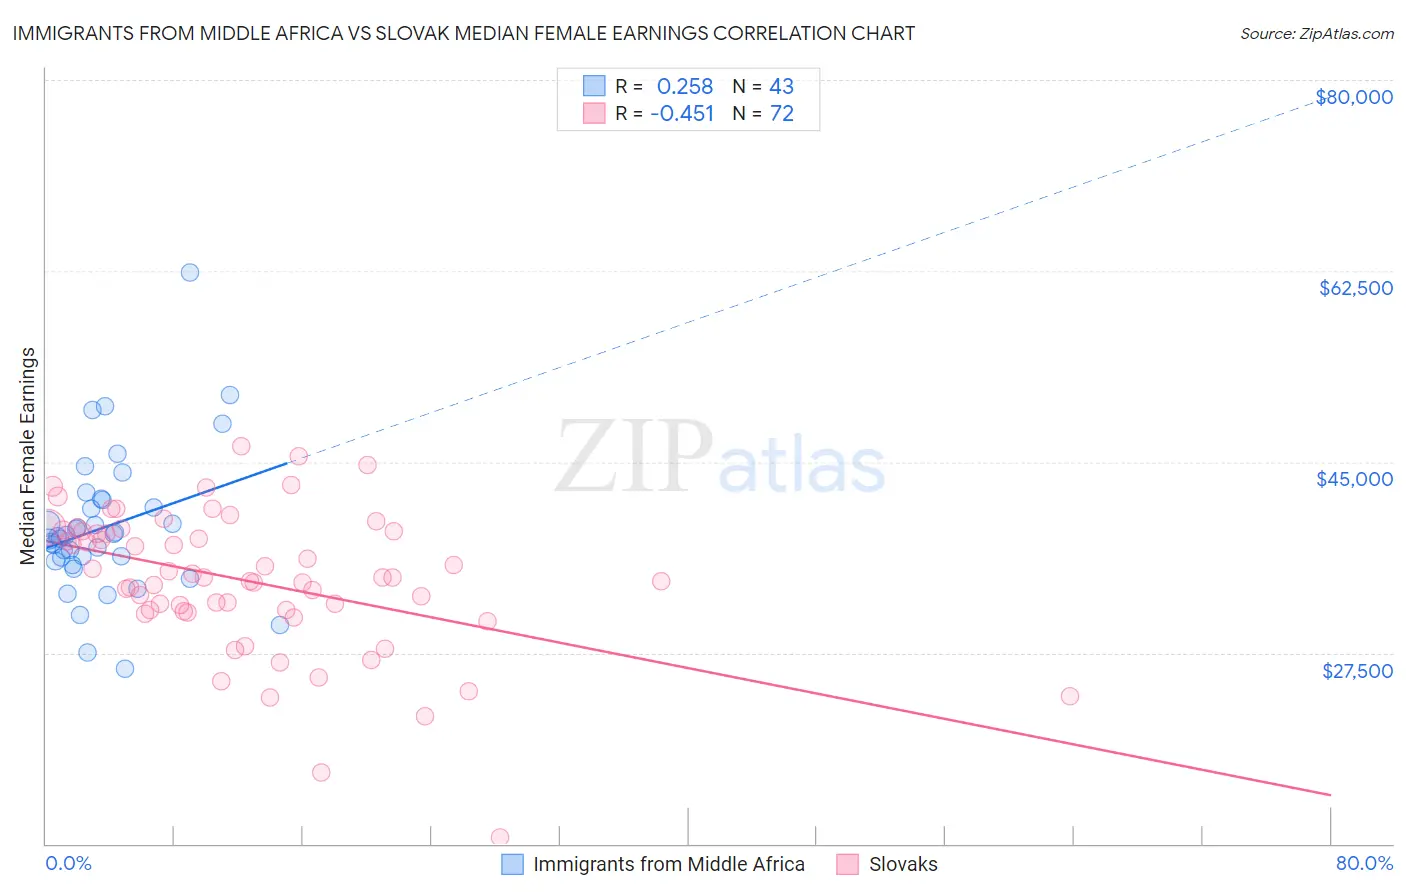 Immigrants from Middle Africa vs Slovak Median Female Earnings